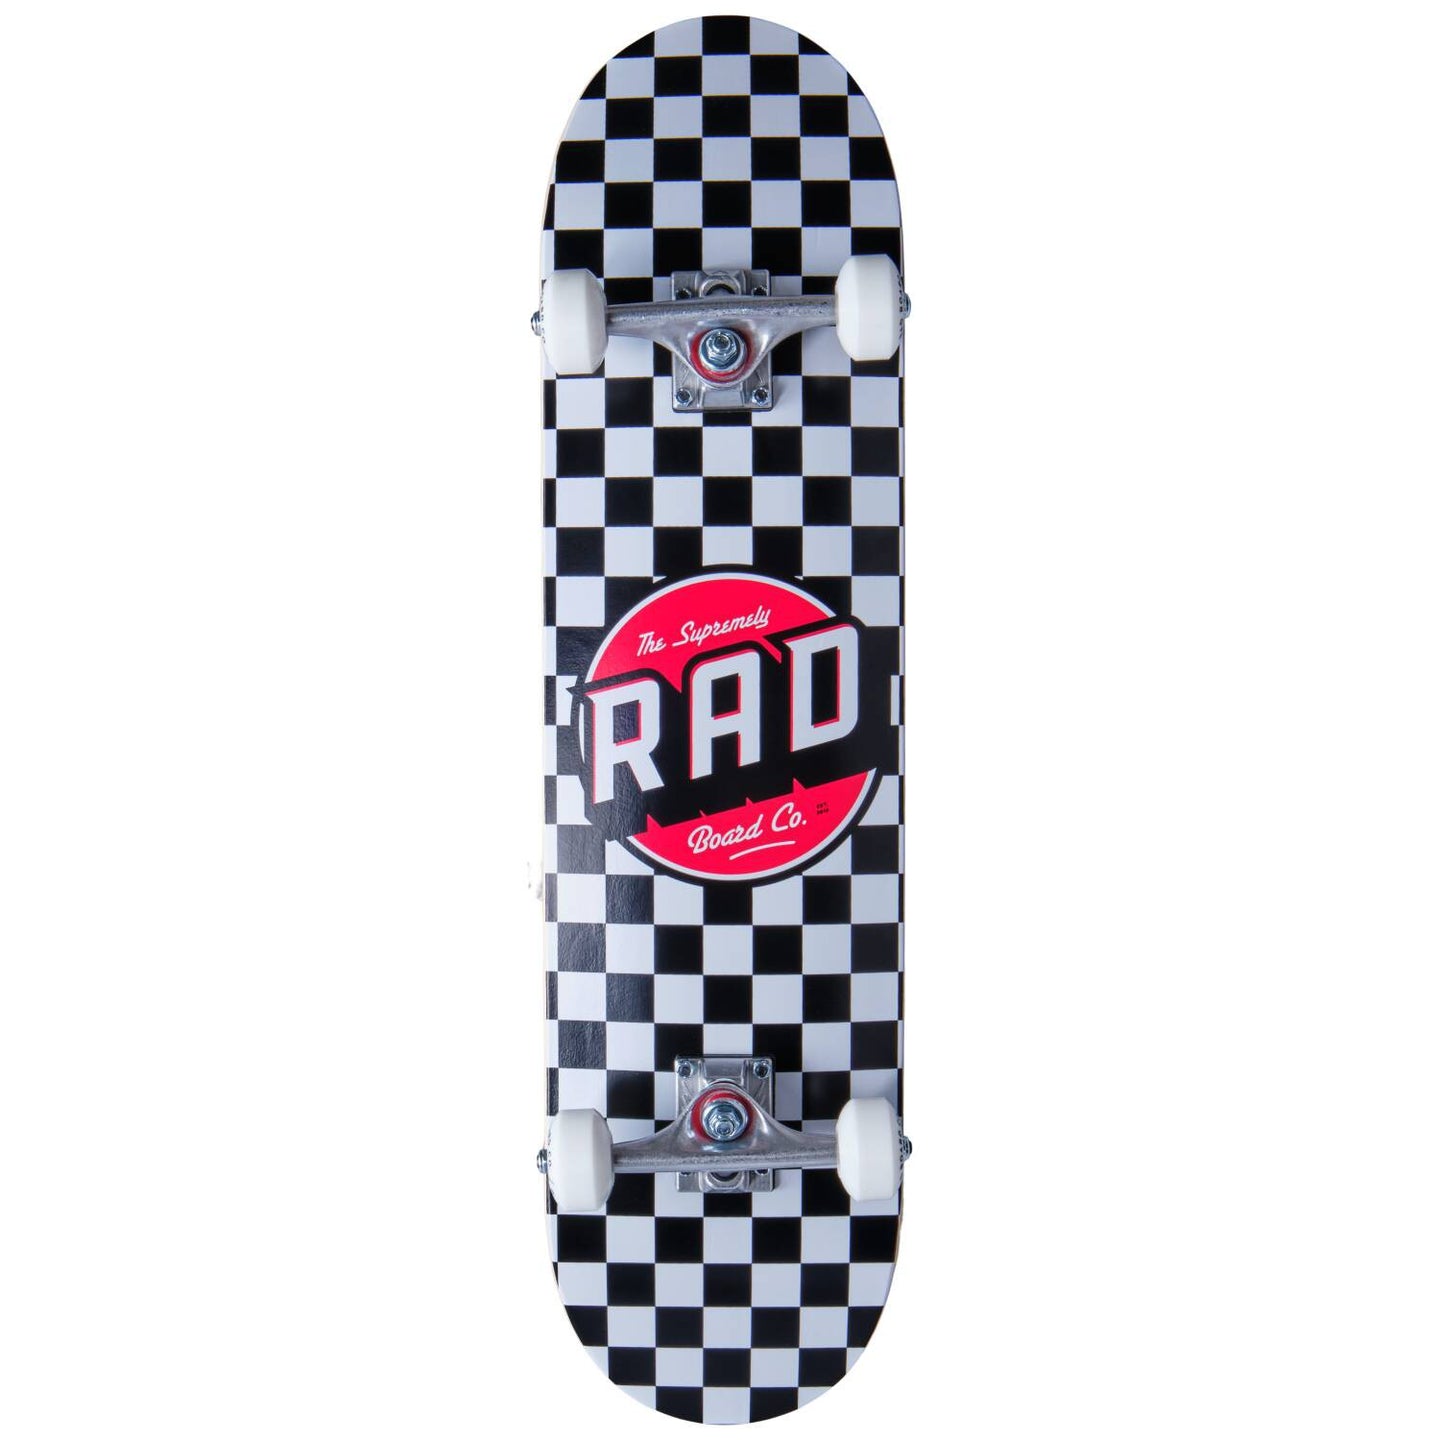 RAD Checkers Komplet Skateboard - Sort-ScootWorld.dk